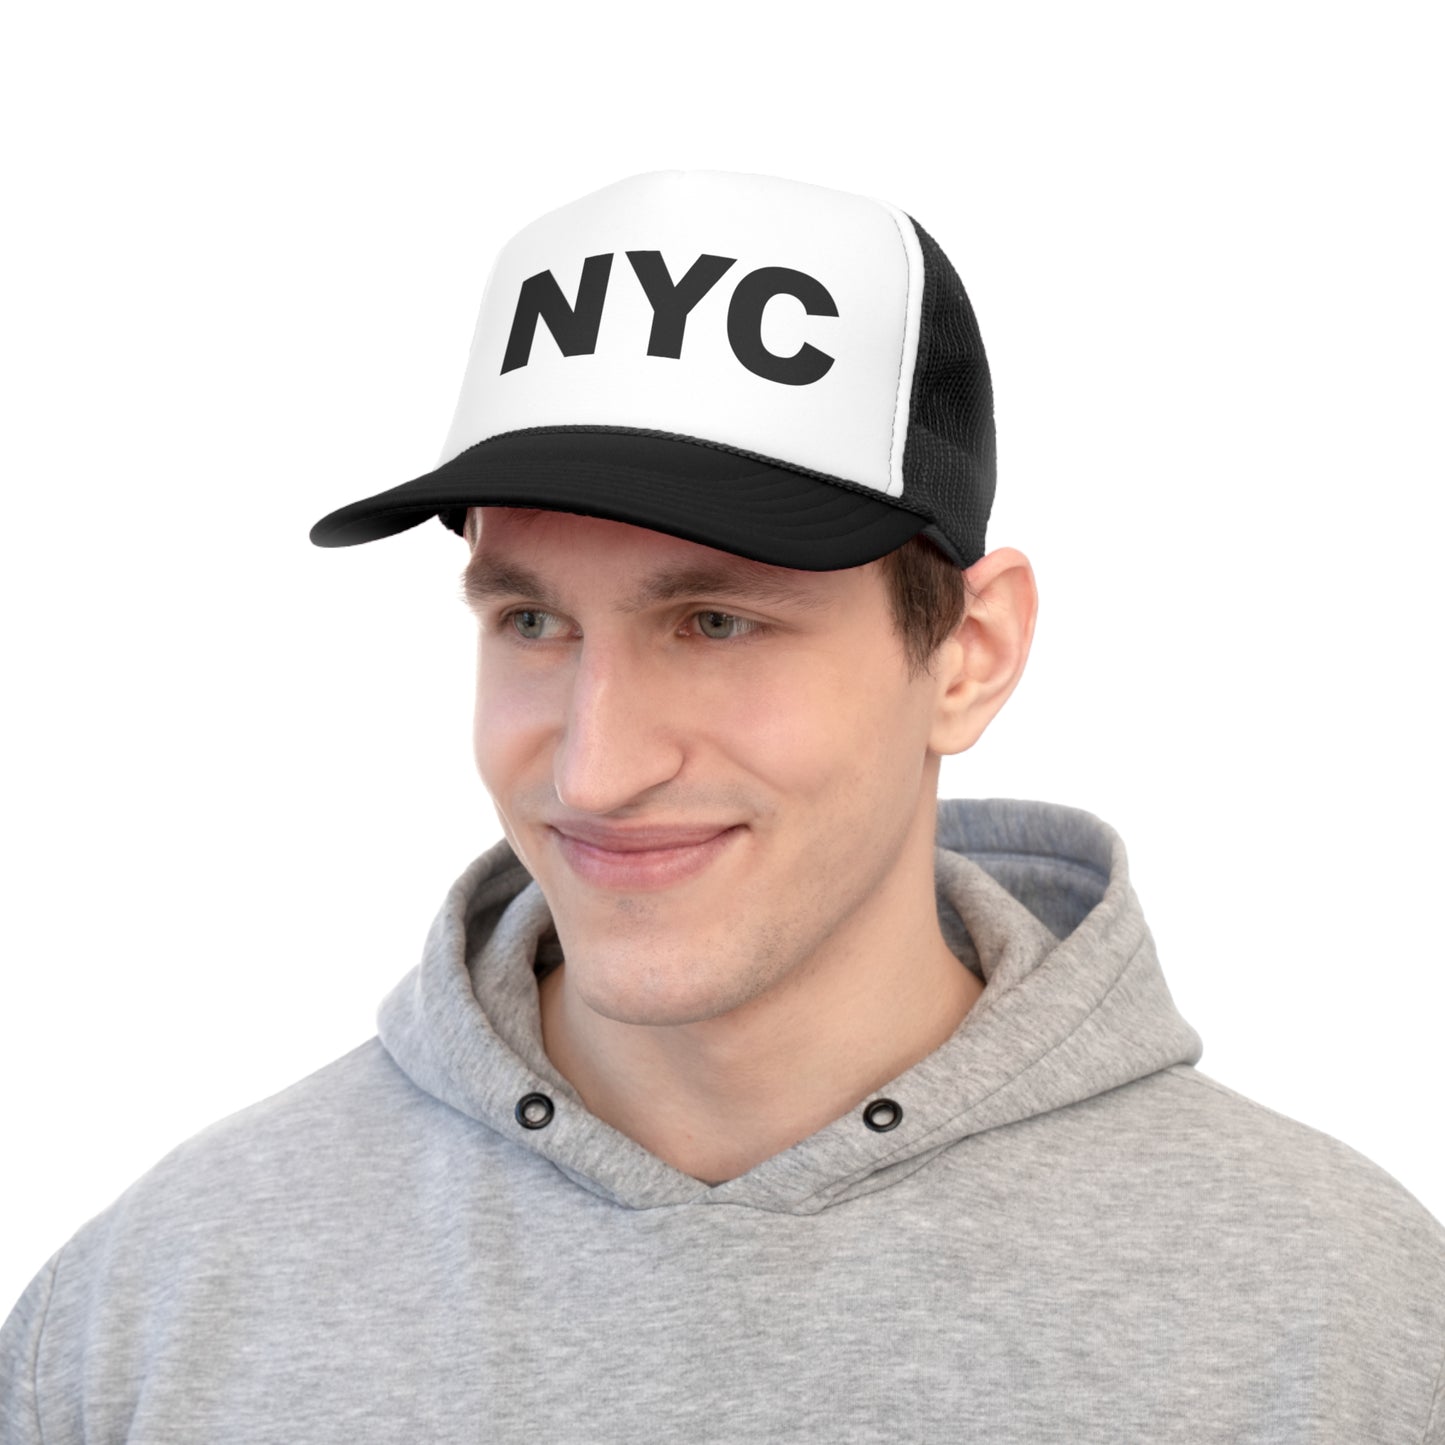 NYC Snapback Trucker Hat, New York Cap, NYC Cap, New York Hat, New York Hats for NYC Natives